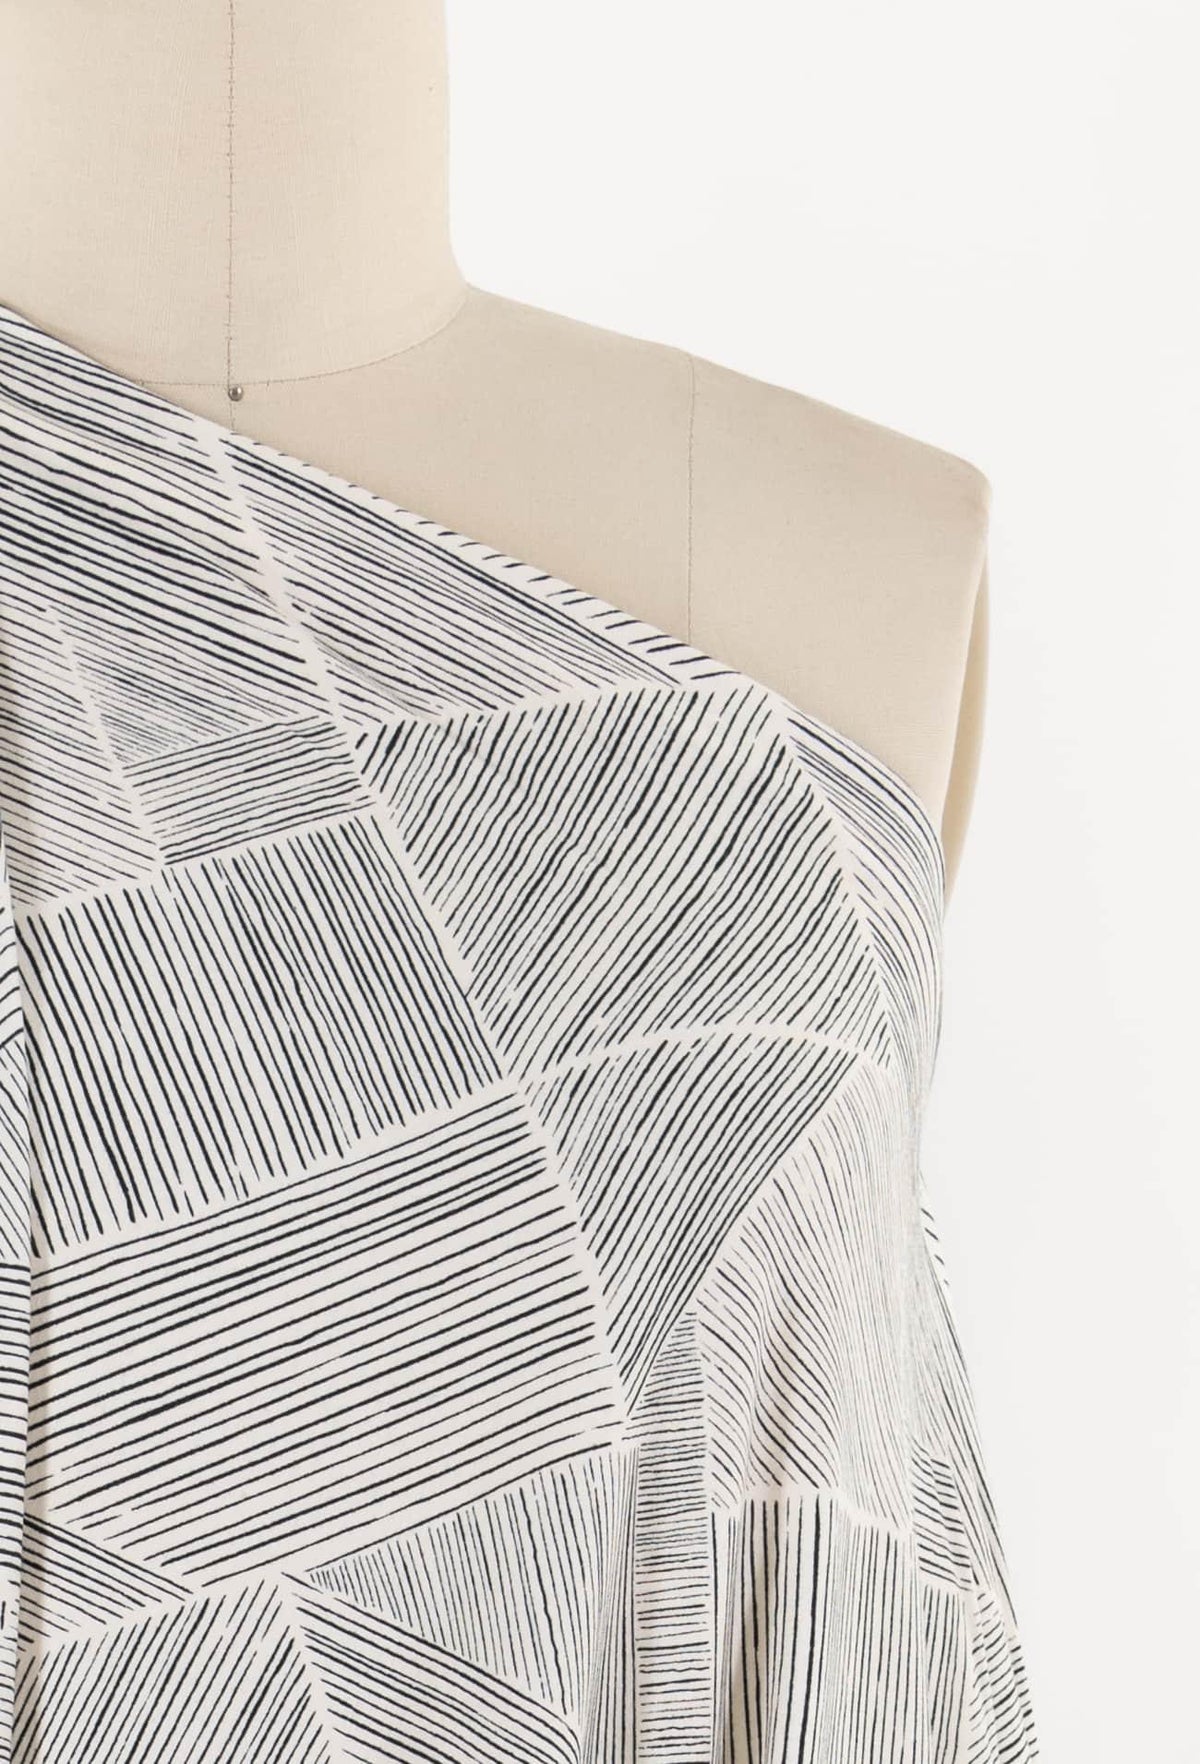 Linear Geometry Cotton Knit - Marcy Tilton Fabrics